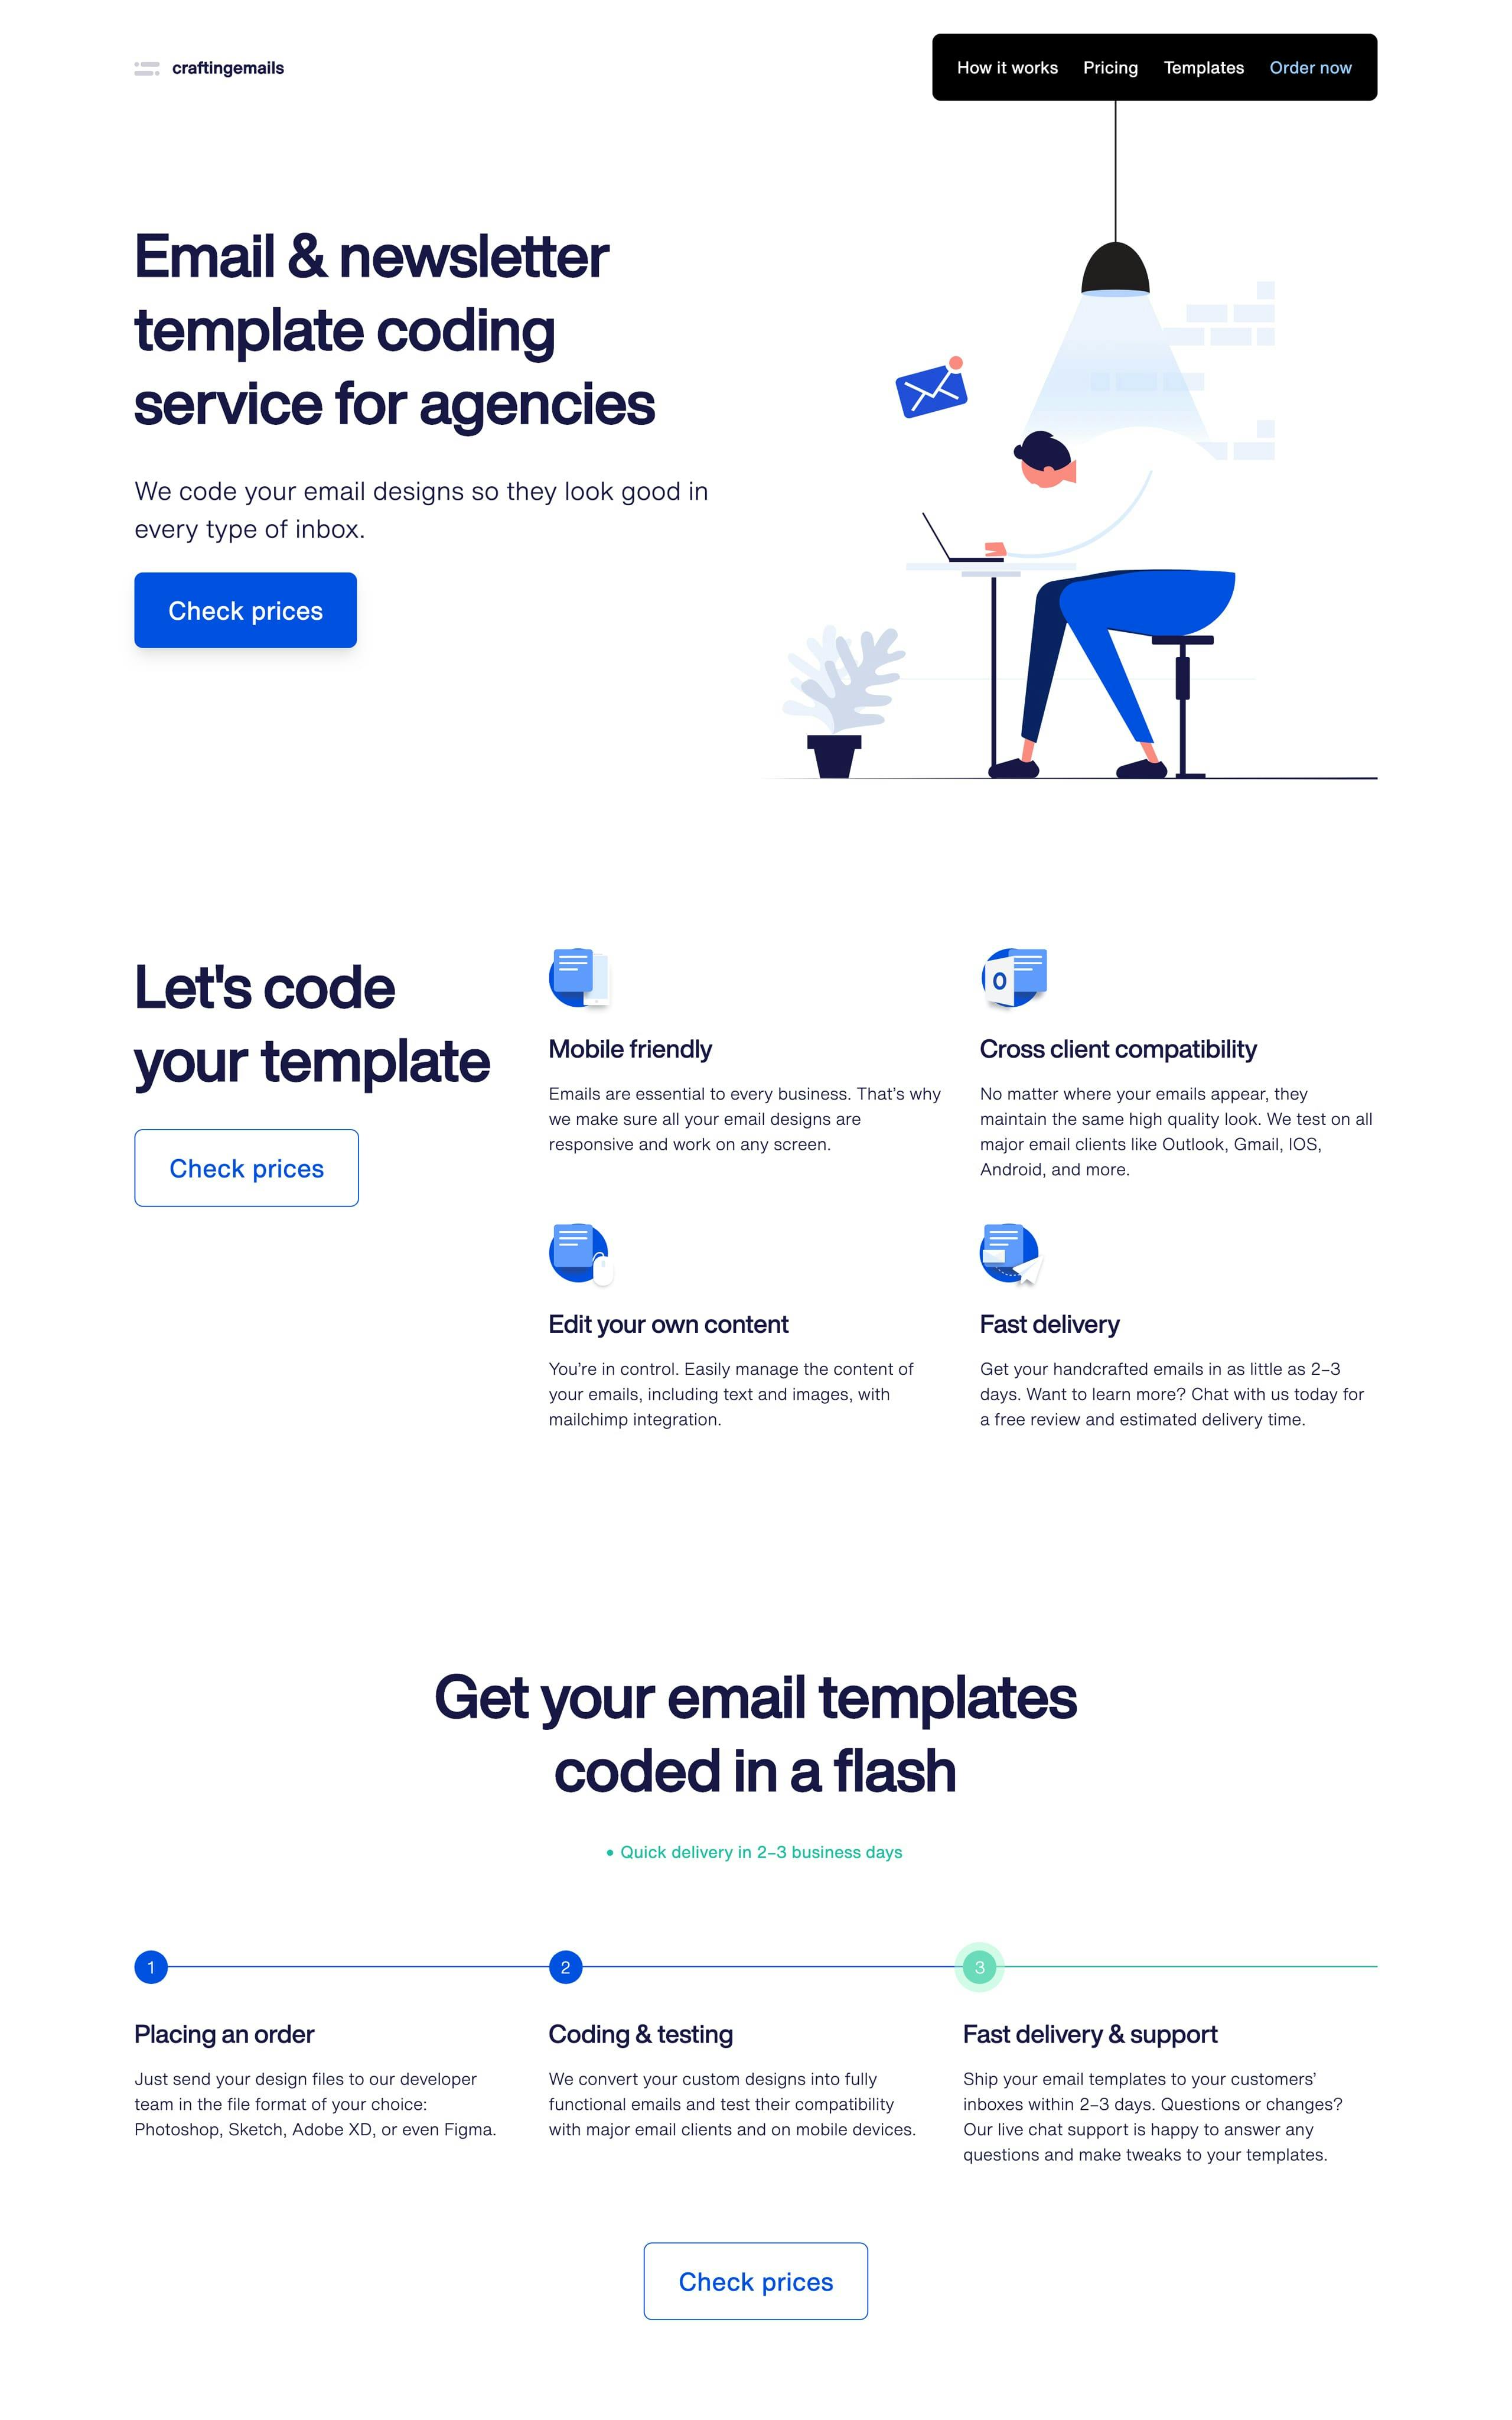 Crafting Emails Website Screenshot